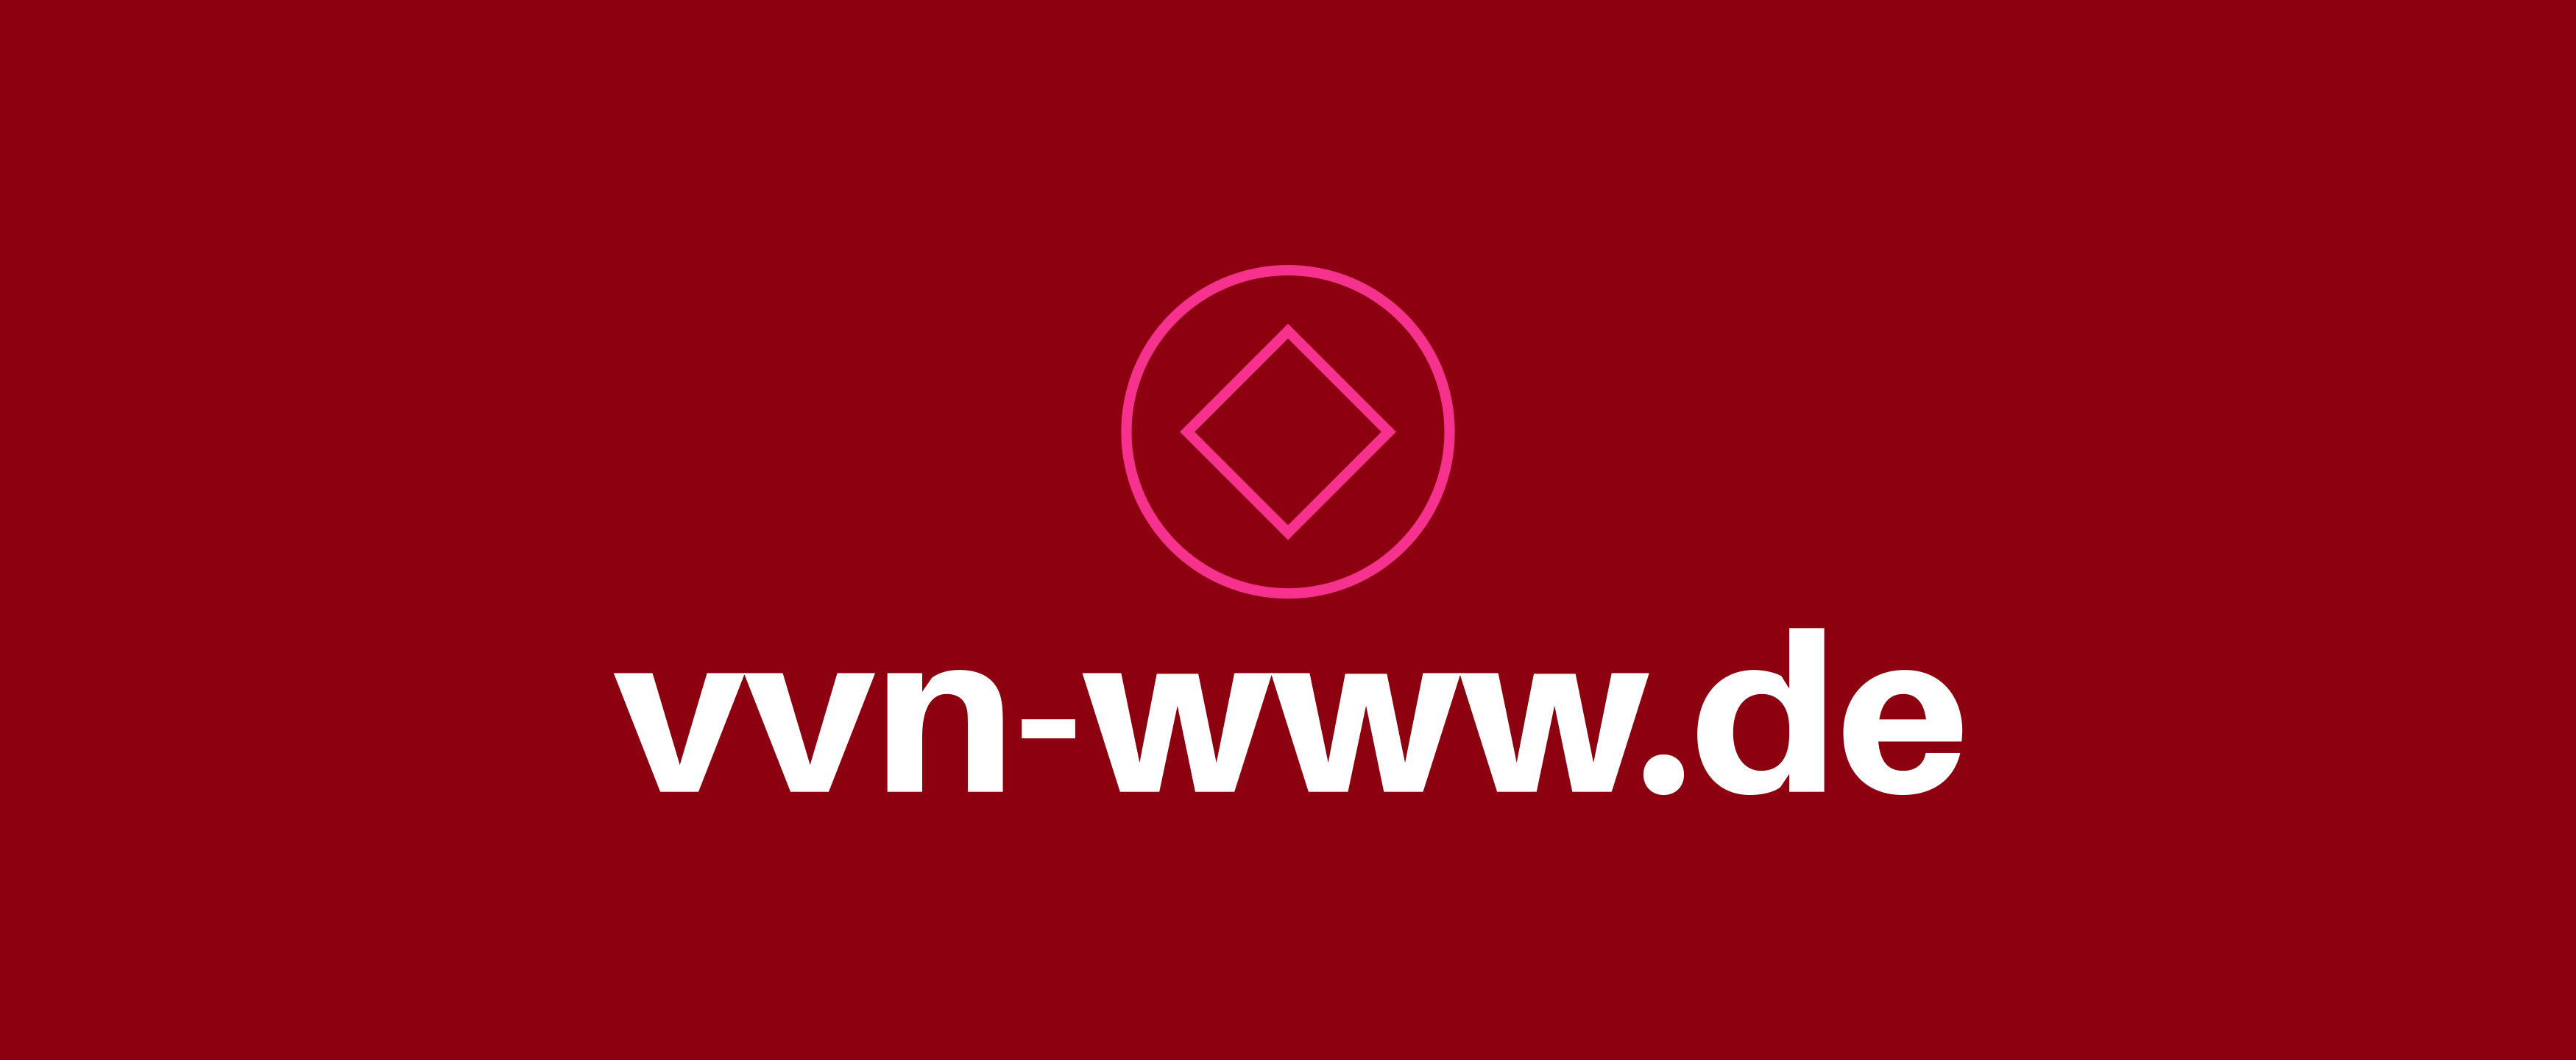 Vvn-www.de